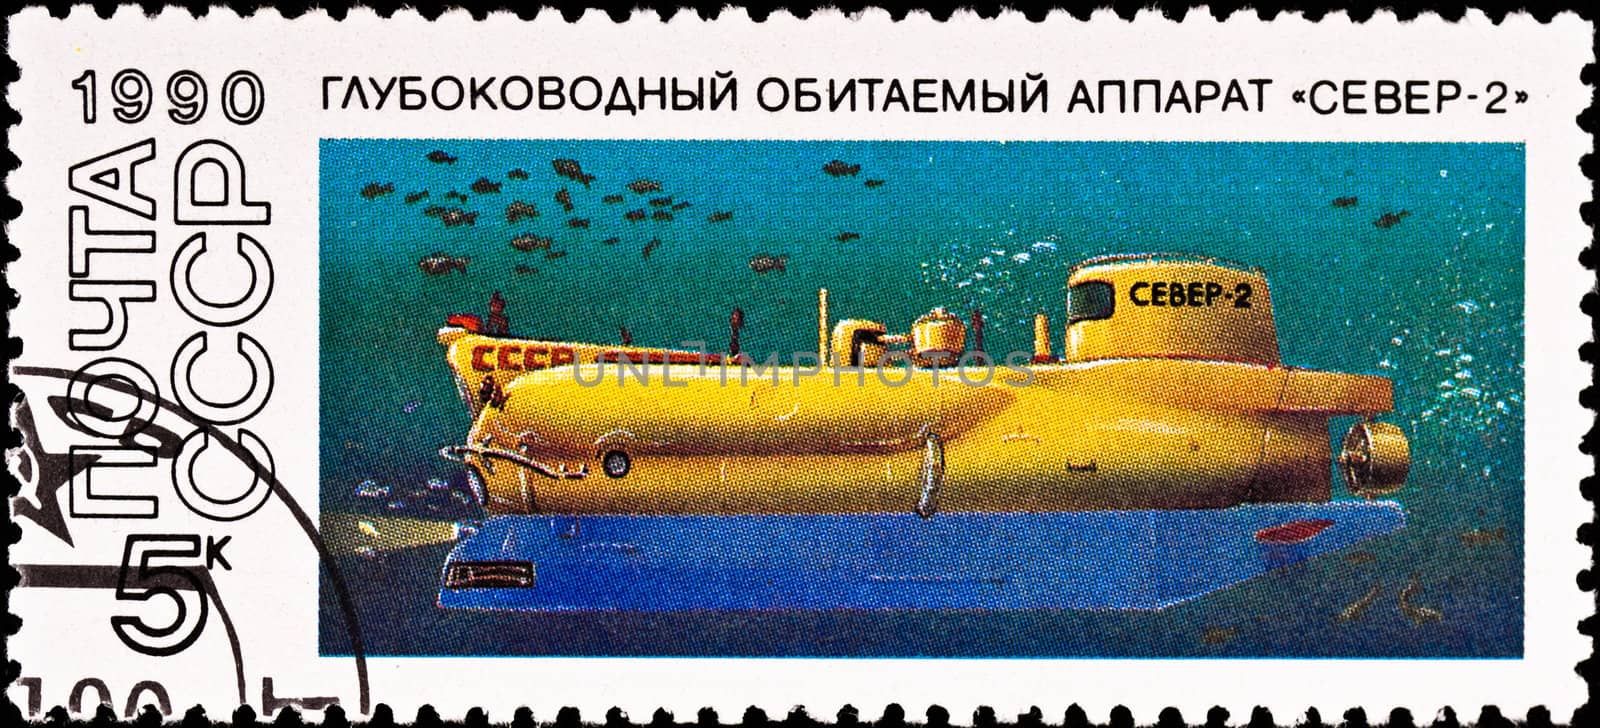 USSR - CIRCA 1990: postage stamp shows submarine "North-2", circa 1990